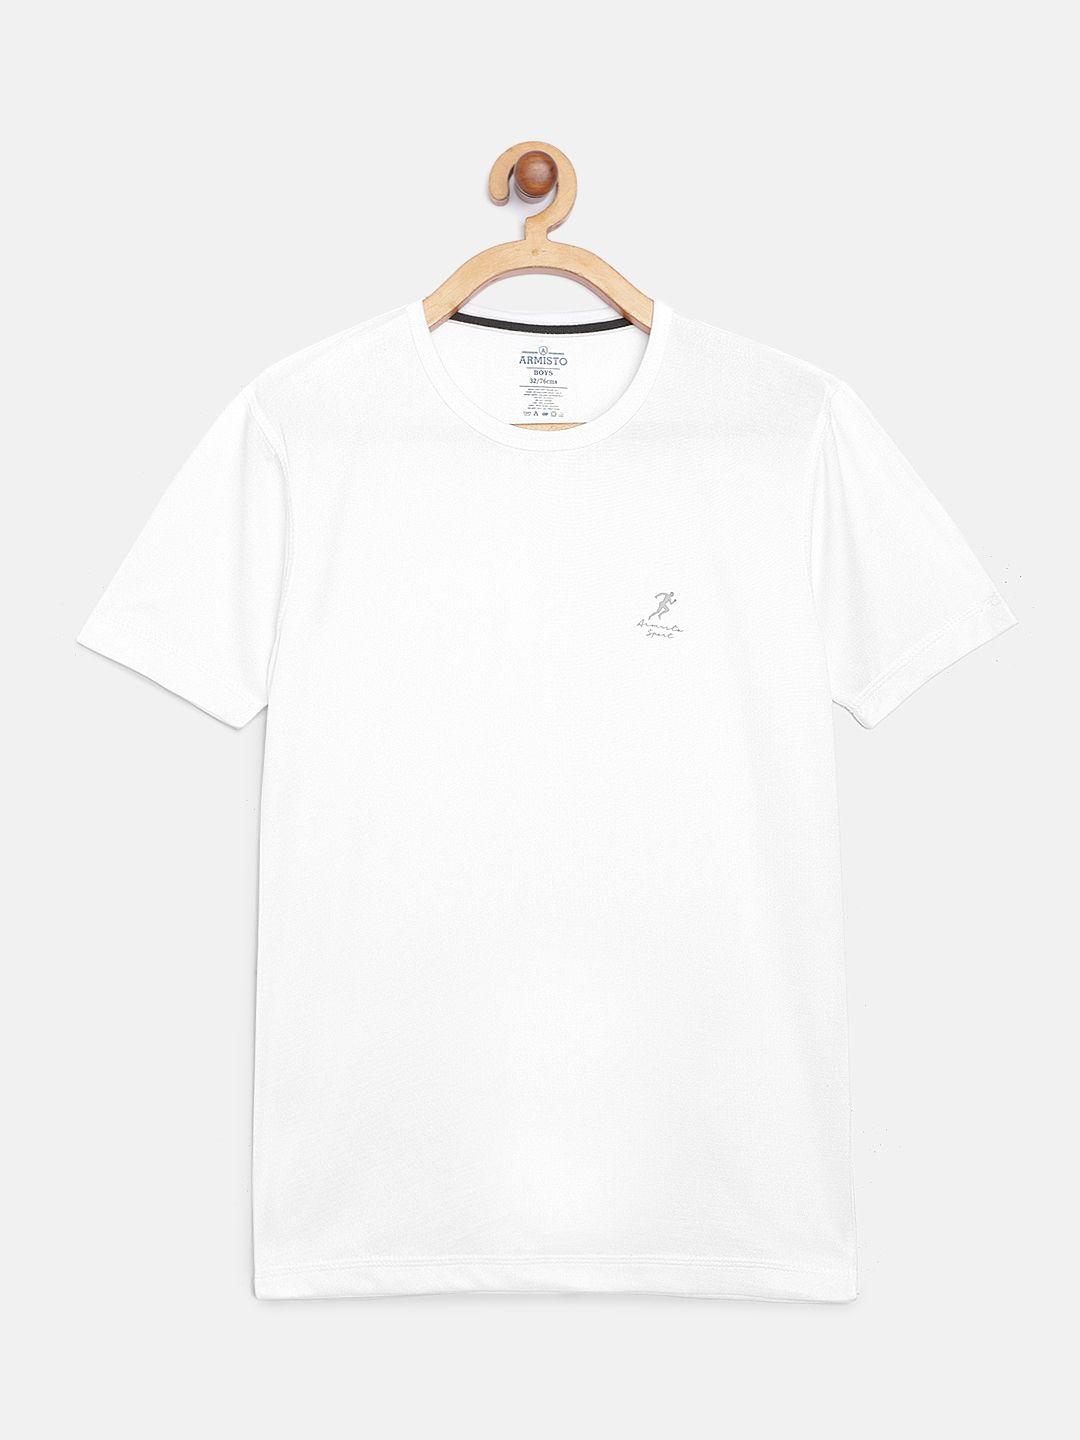 armisto-boys-white-solid-dri-fit-cricket-t-shirt